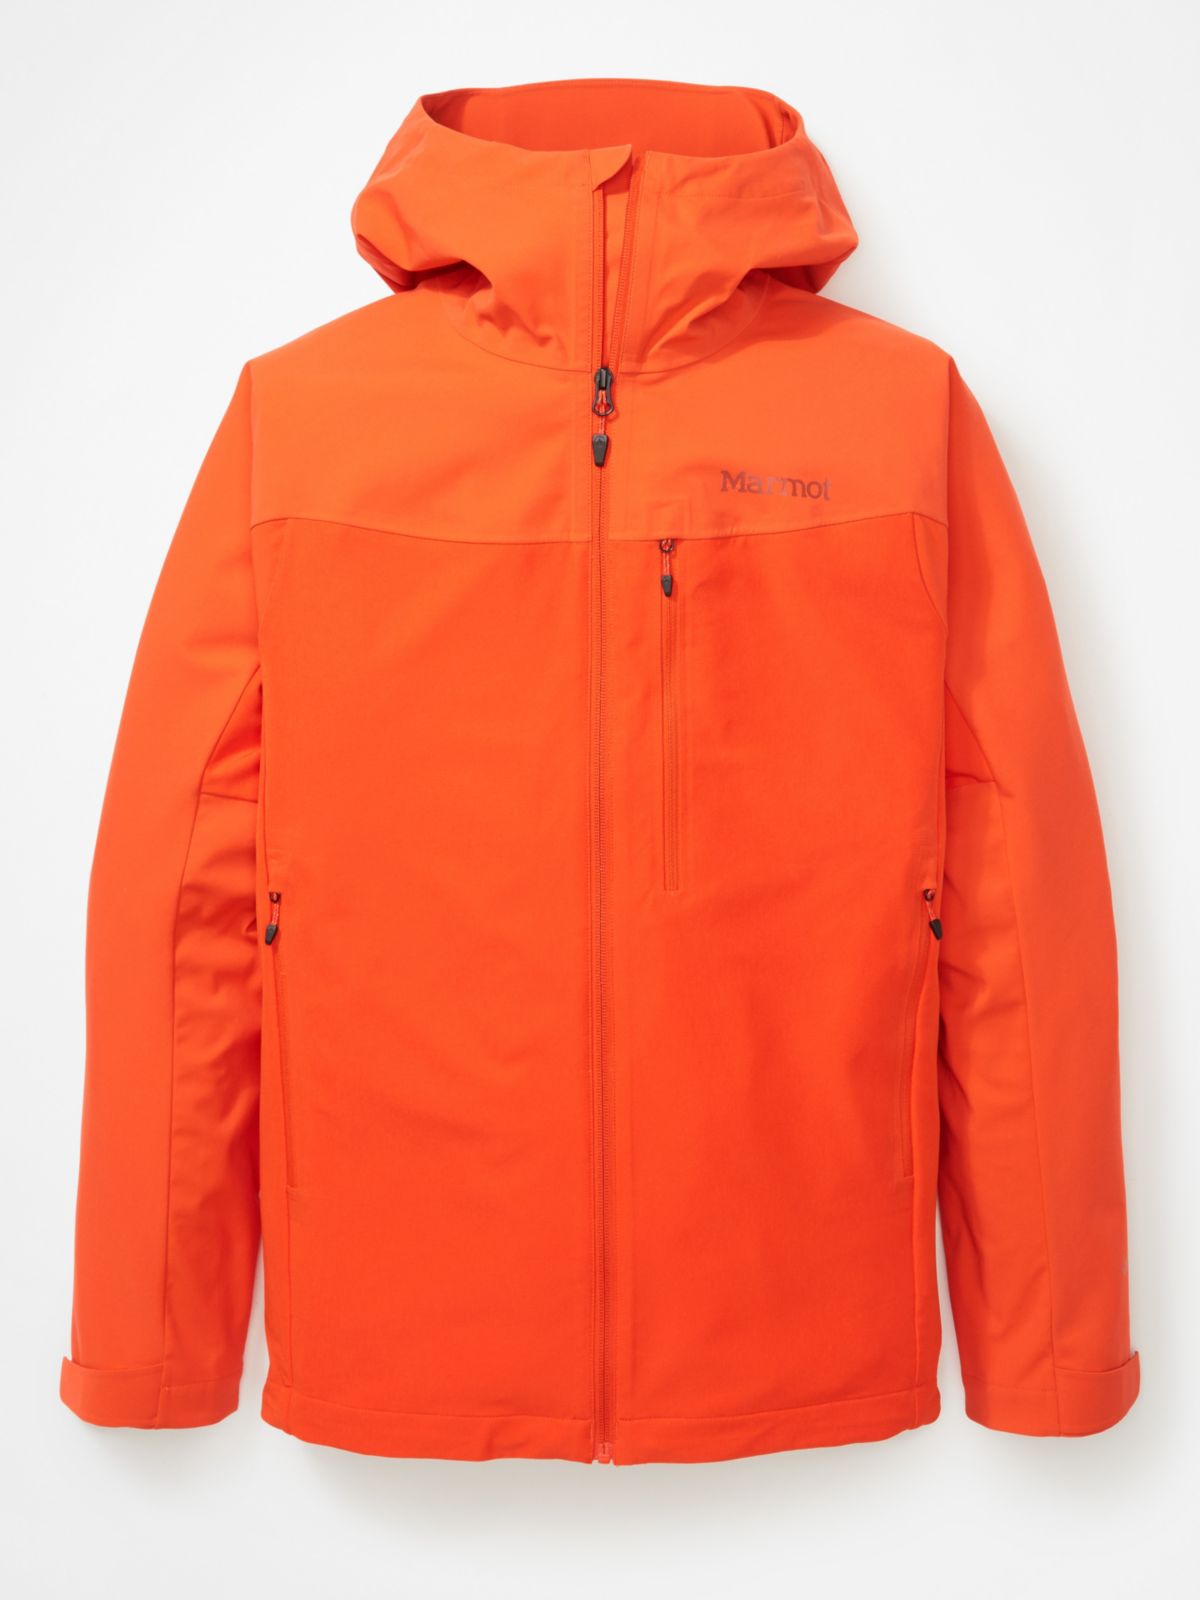 Marmot hooded jacket in orange